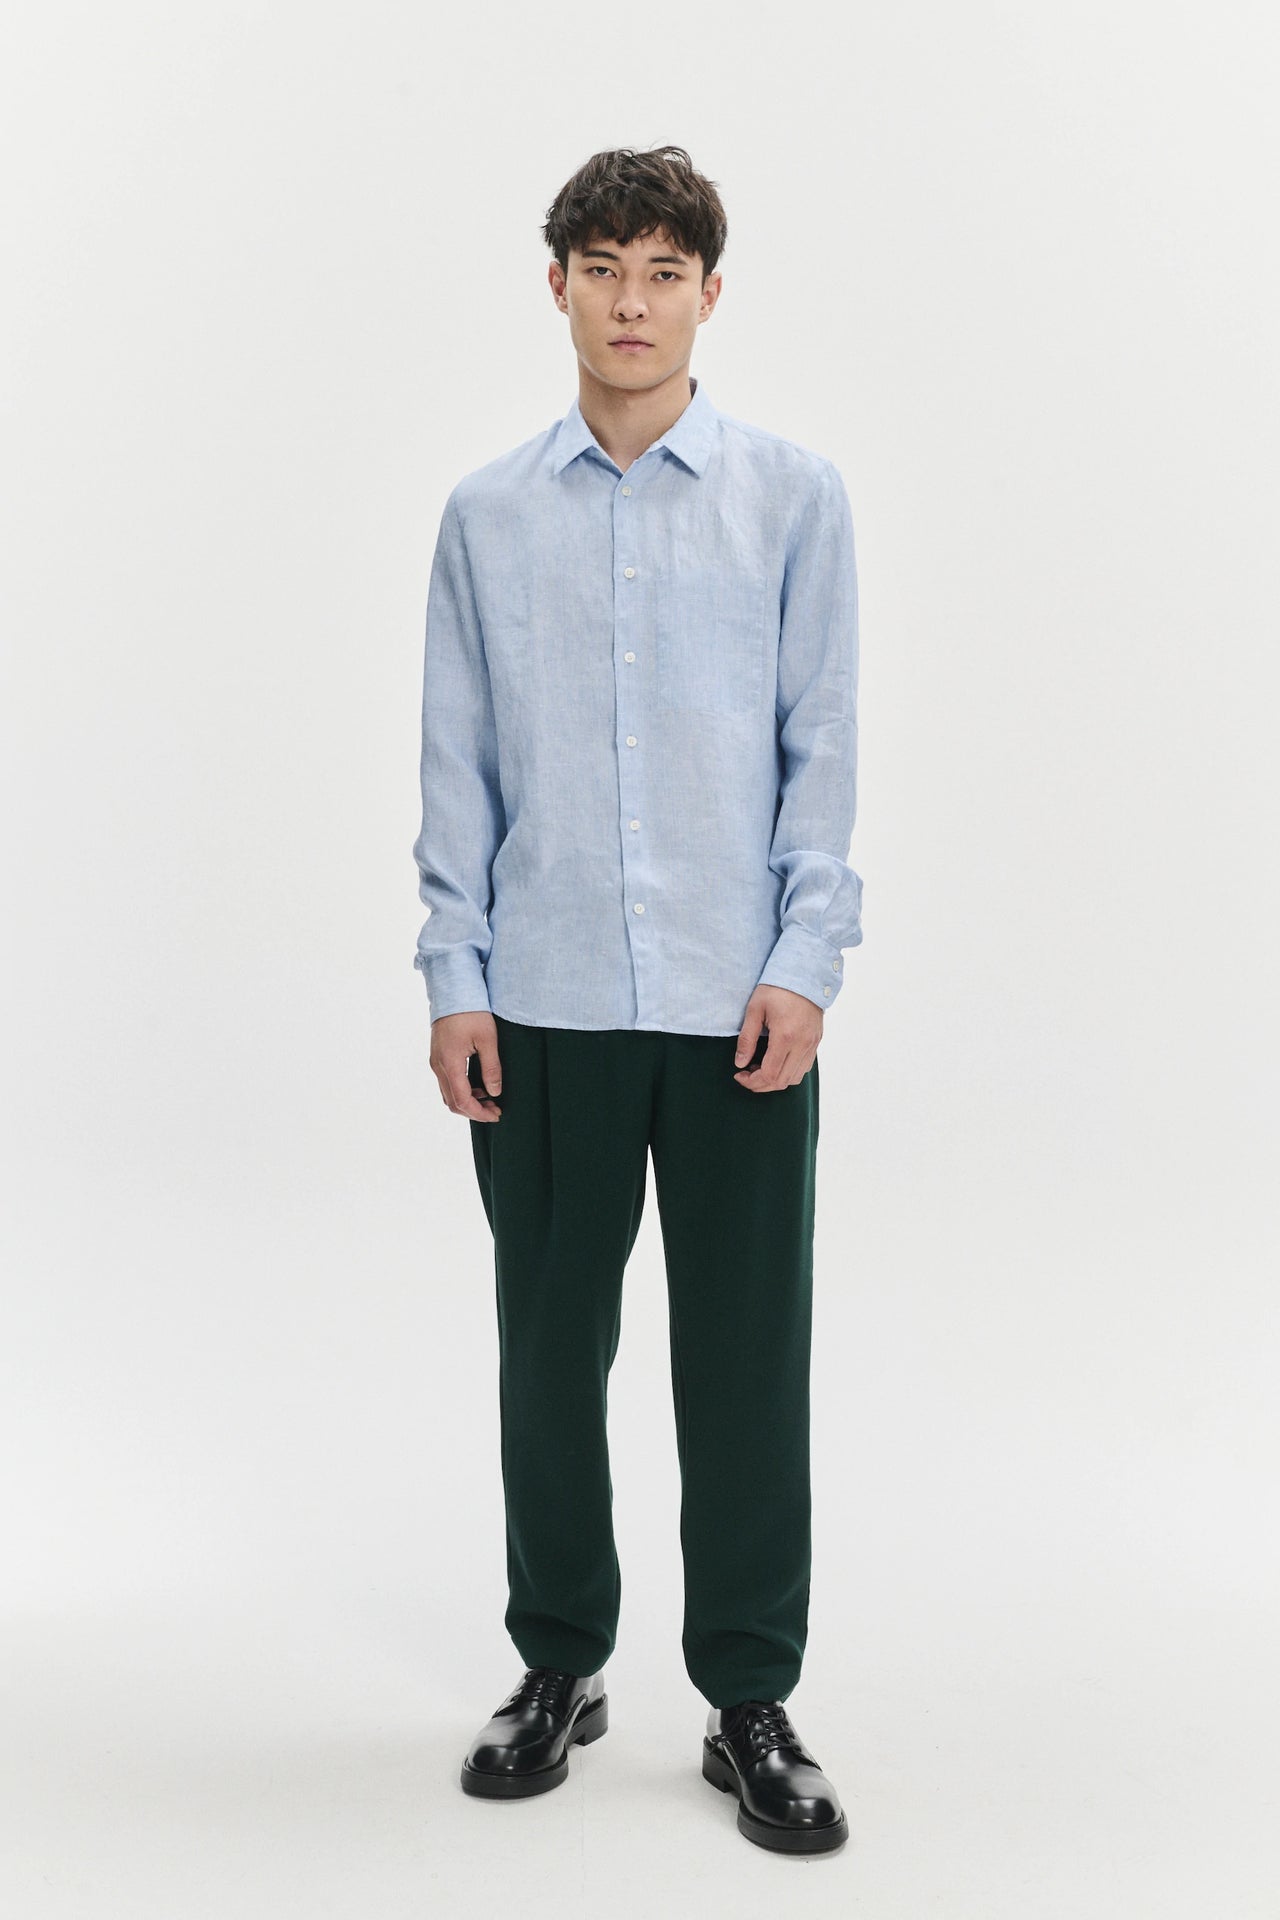 Feel Good Shirt in a Sky Blue Rich Structured Italian Oxford Linen